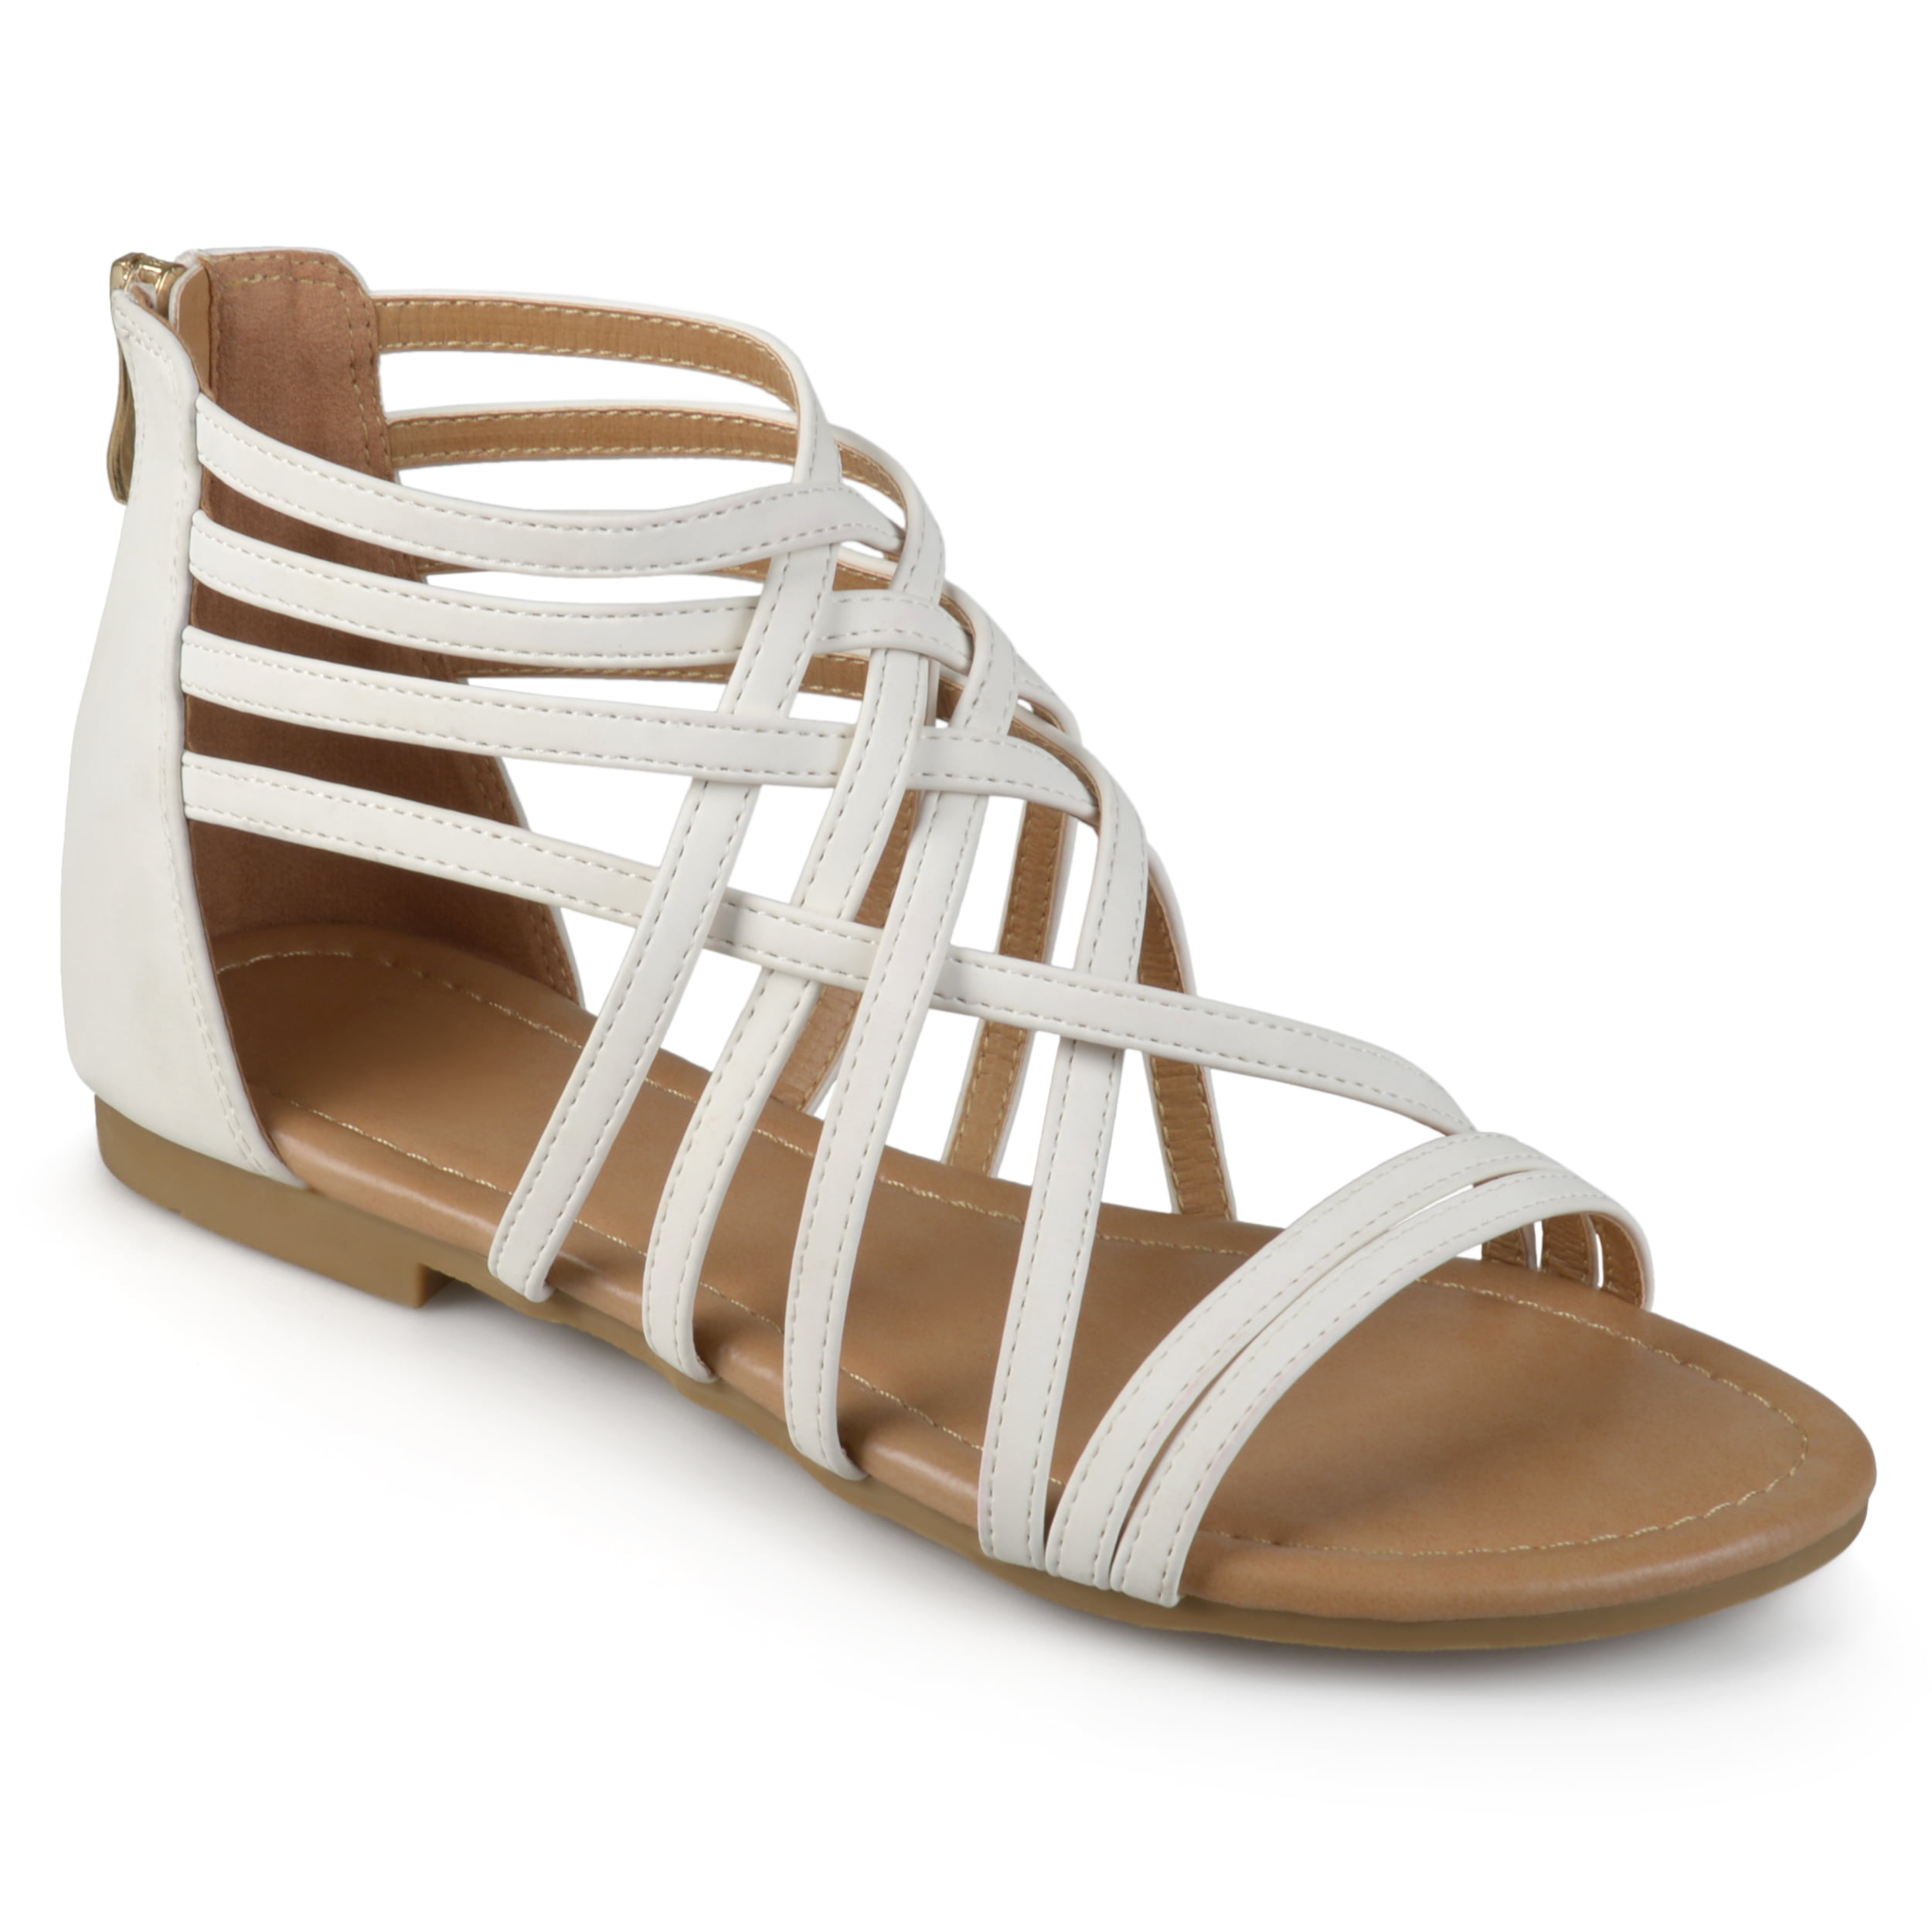 JOSALYN22 New Fushion Bead Flat T-Strap Cute Sandals Gladiator Party Women Shoes 